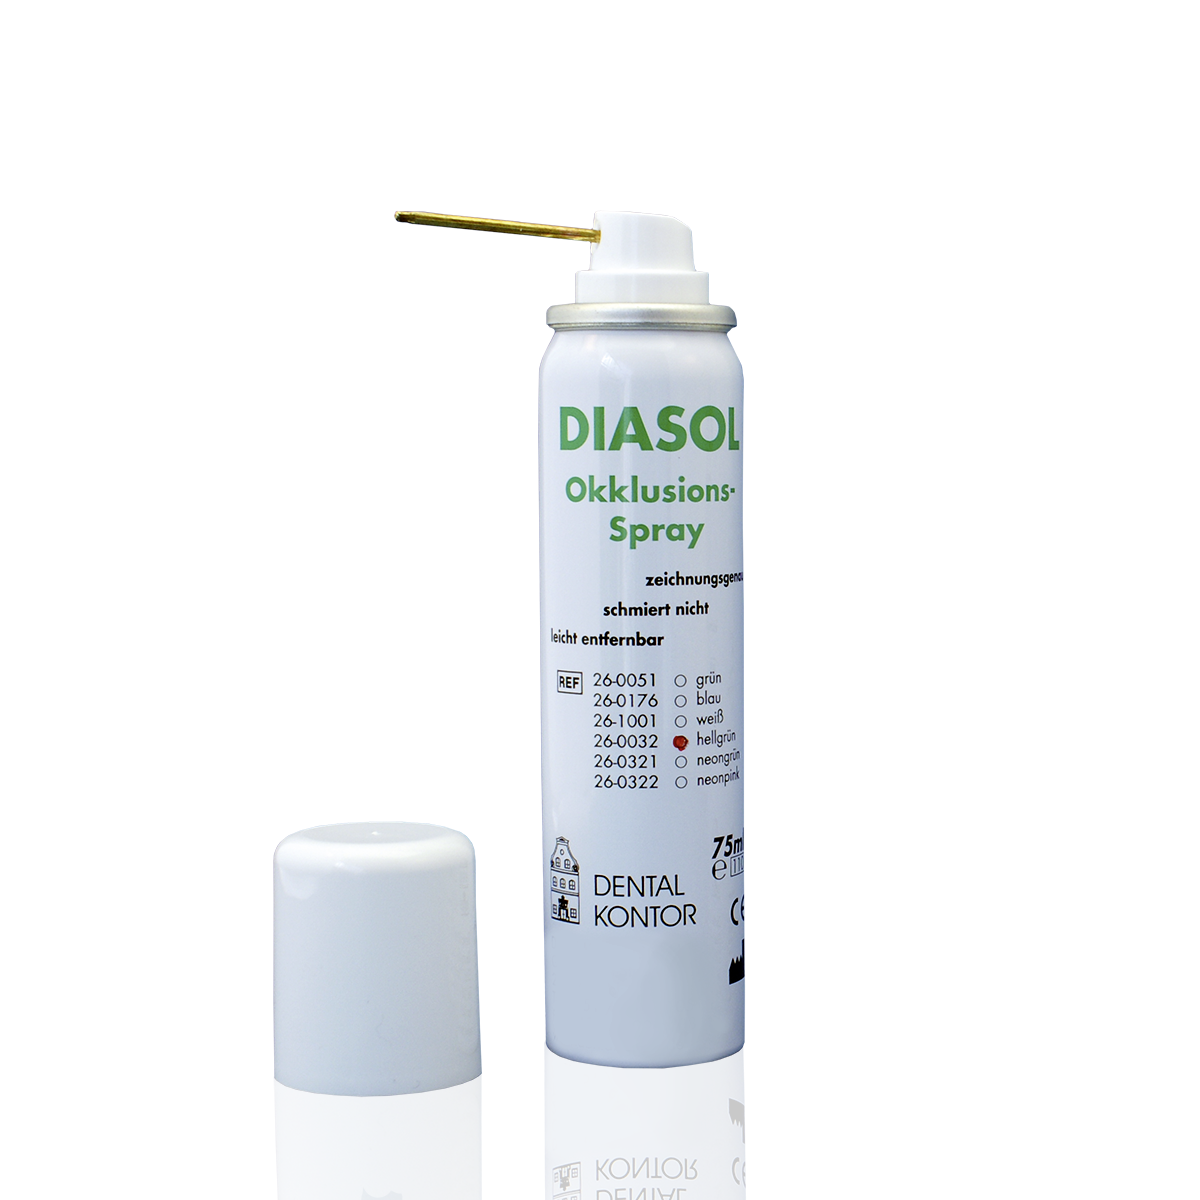 Diasol Okklusionsspray mit Metalldüse